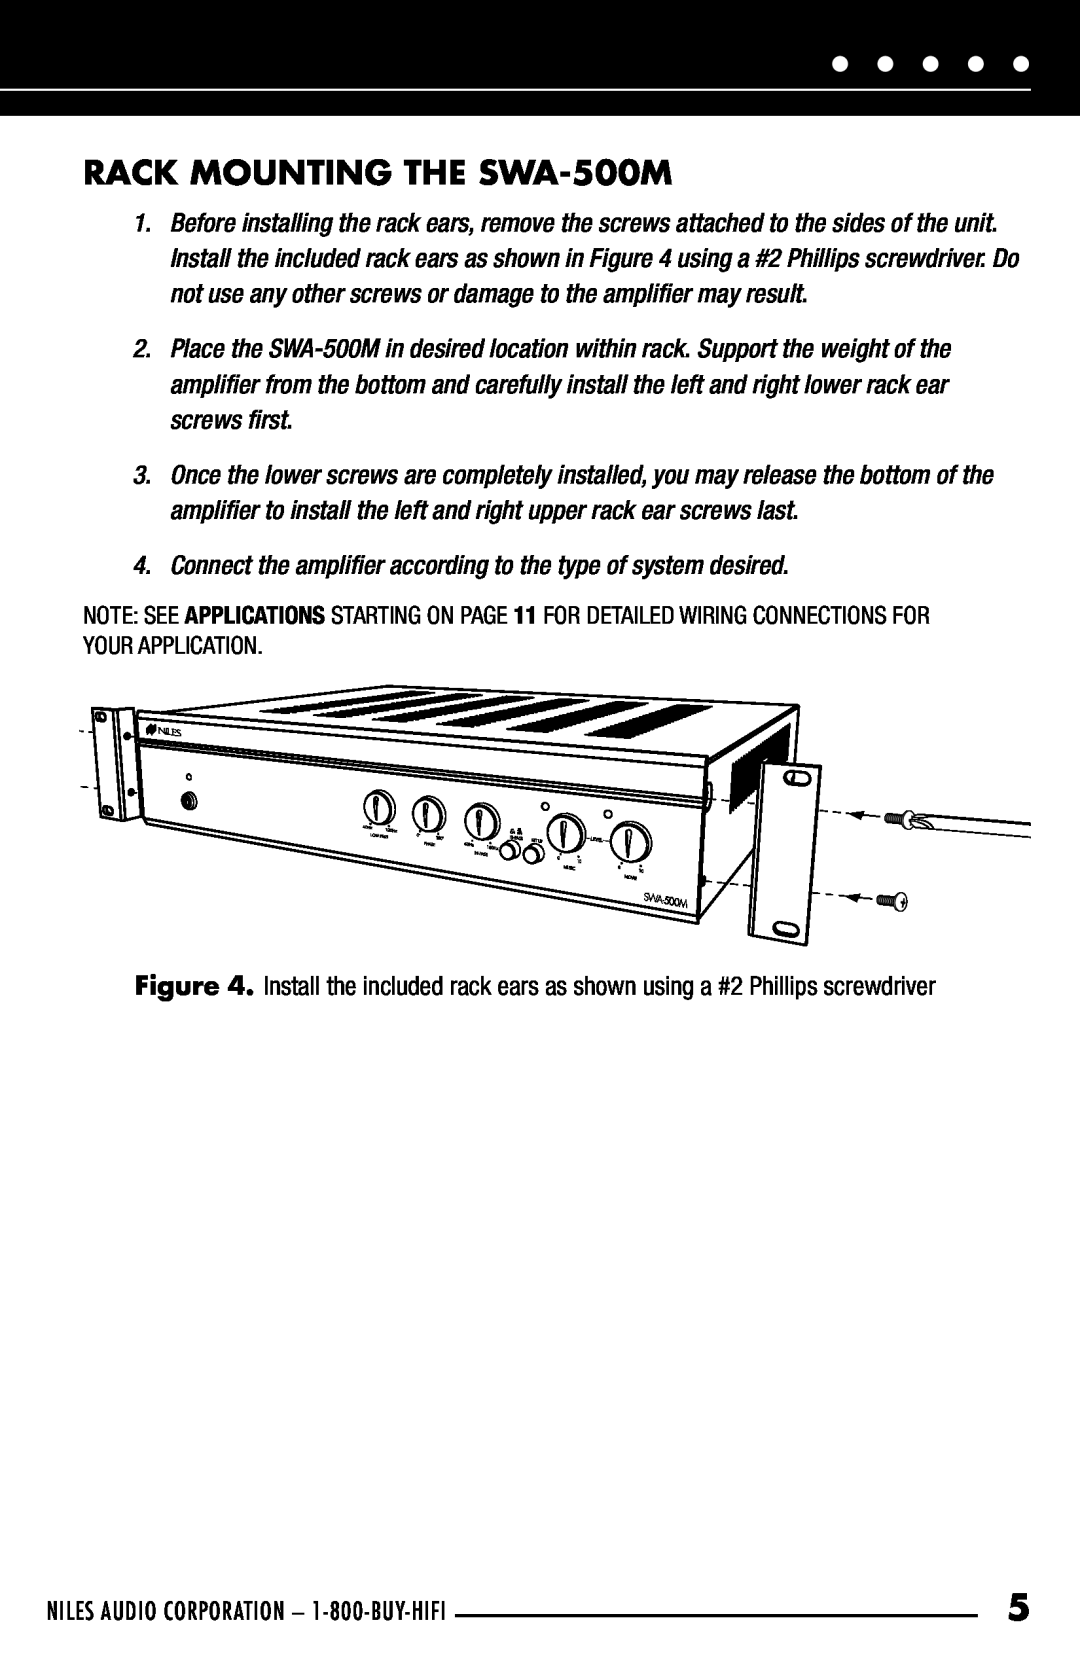 Niles Audio manual RACK MOUNTING THE SWA-500M 